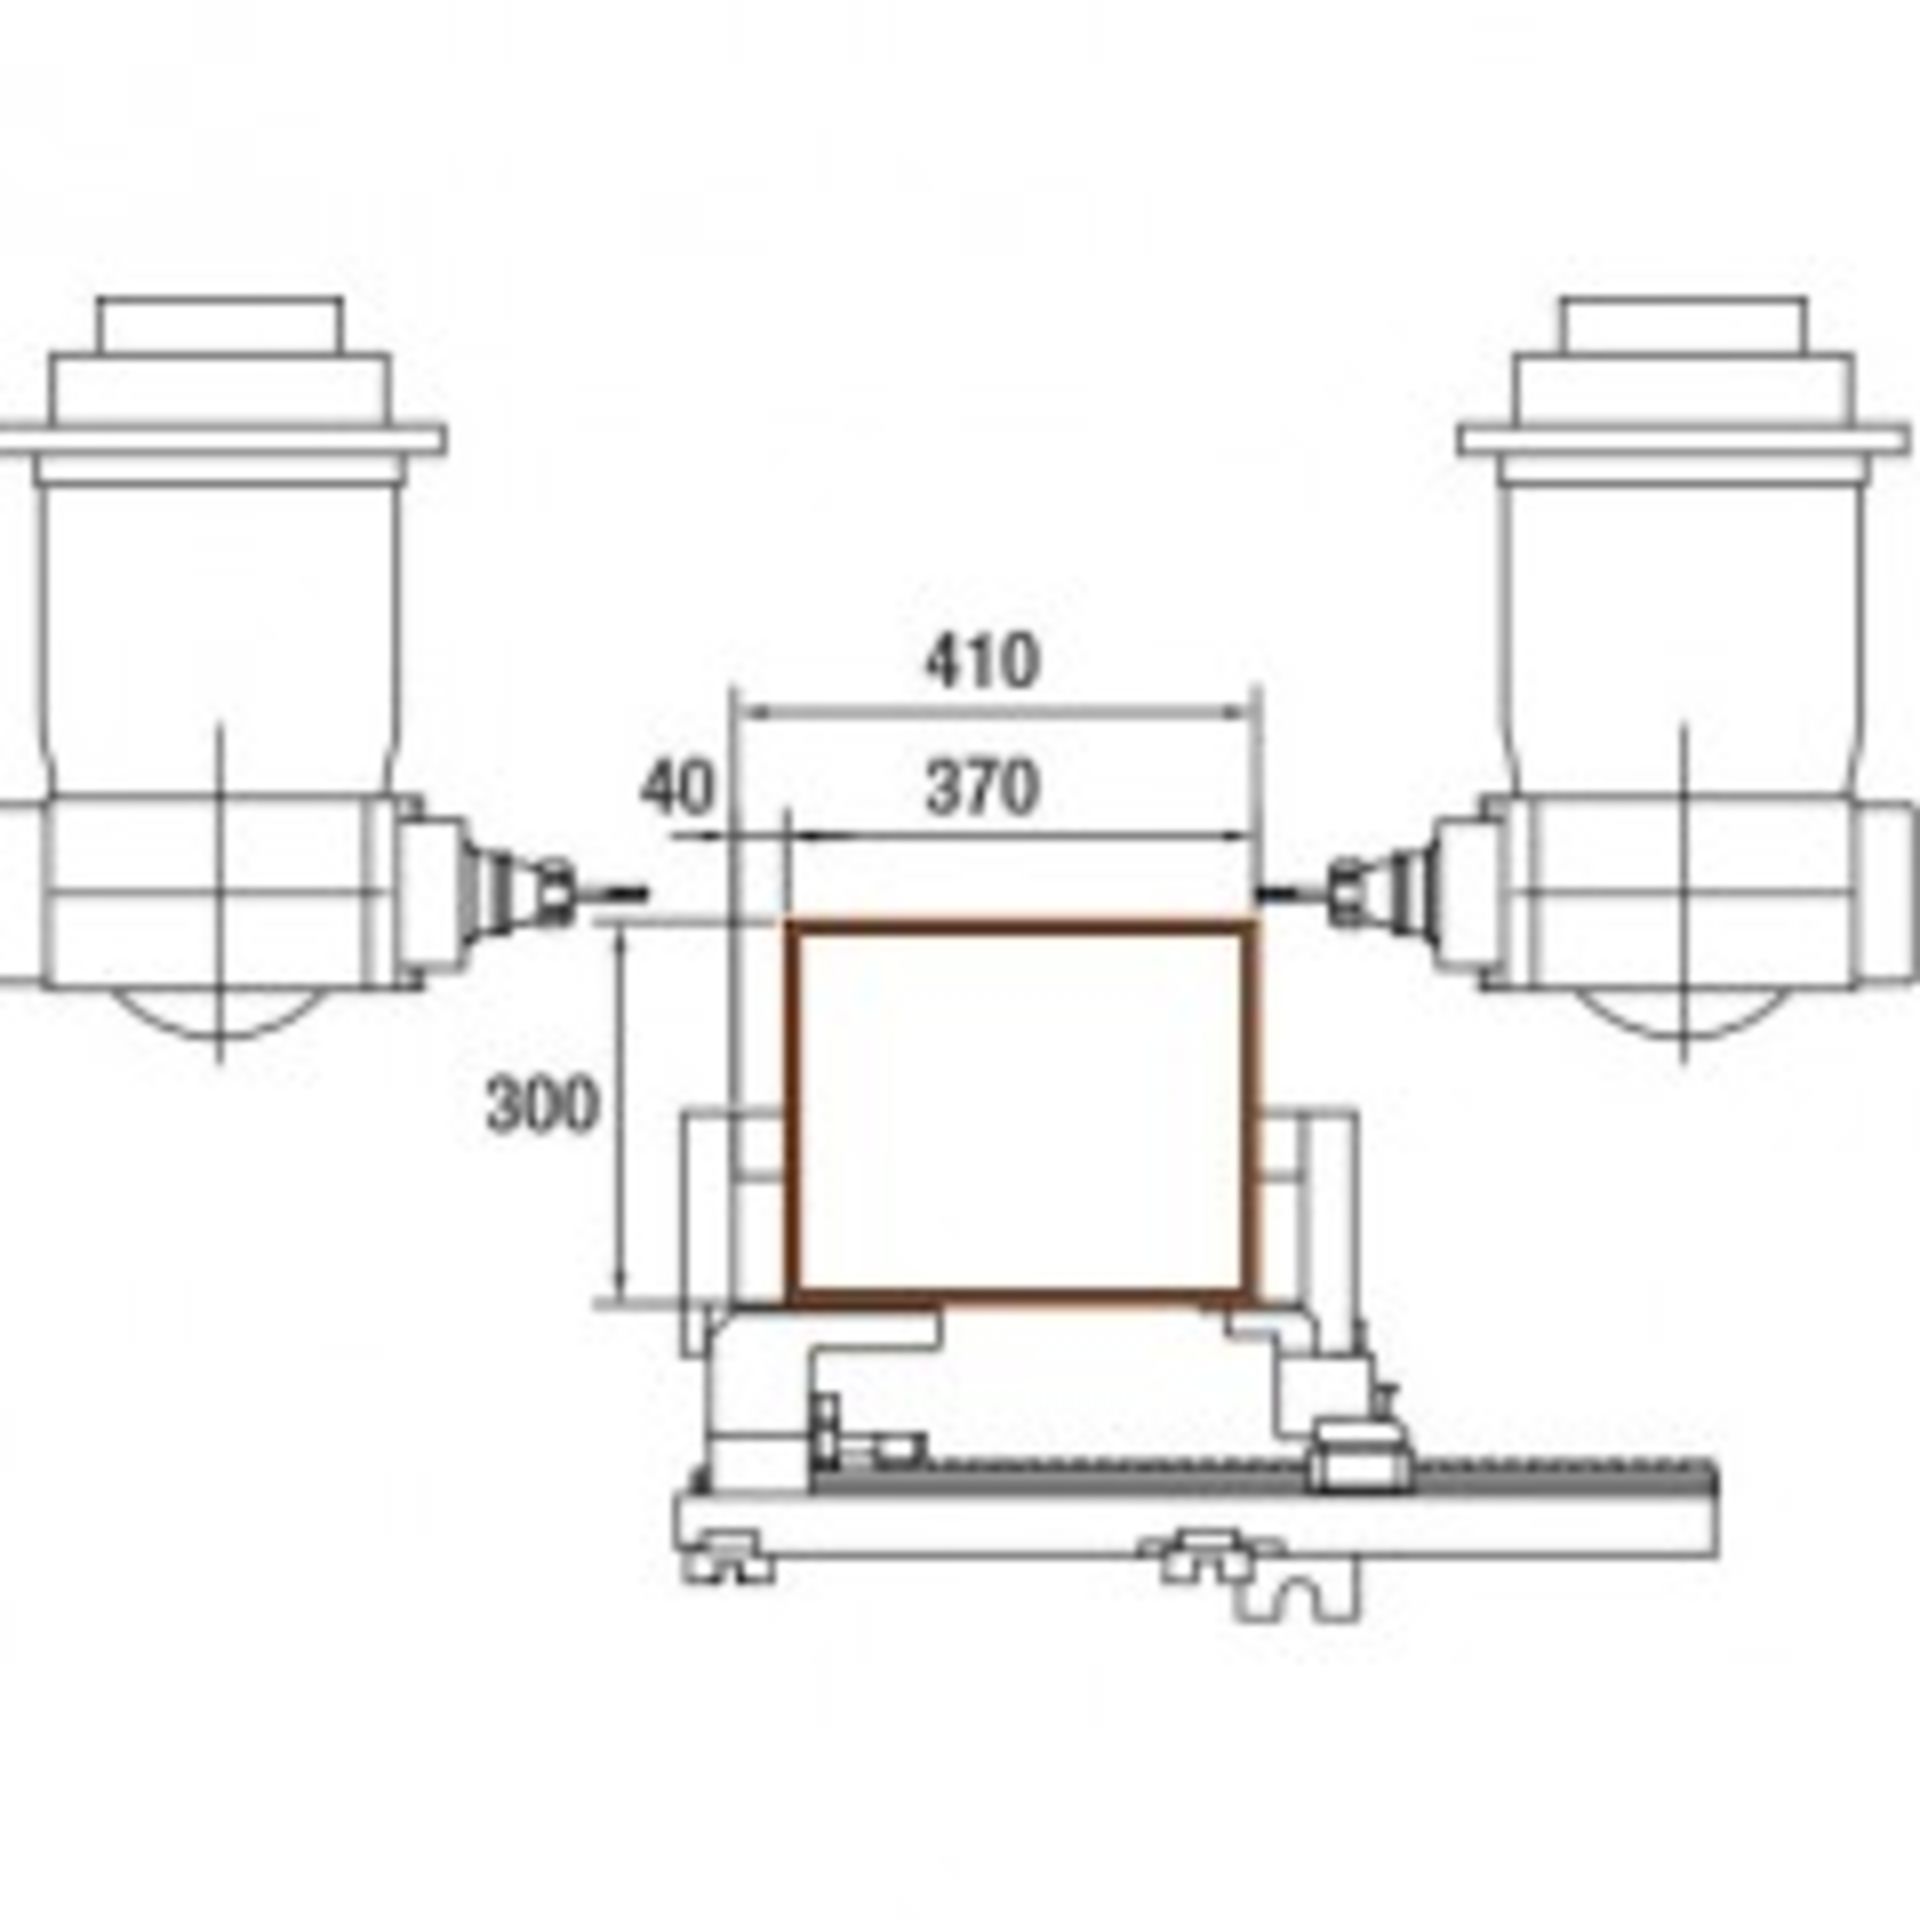 10 METER ELUMATEC SBZ 151 5-AXIS CNC PROFILE VERTICAL MACHINIG CENTER, NEW 2014 - Image 19 of 31